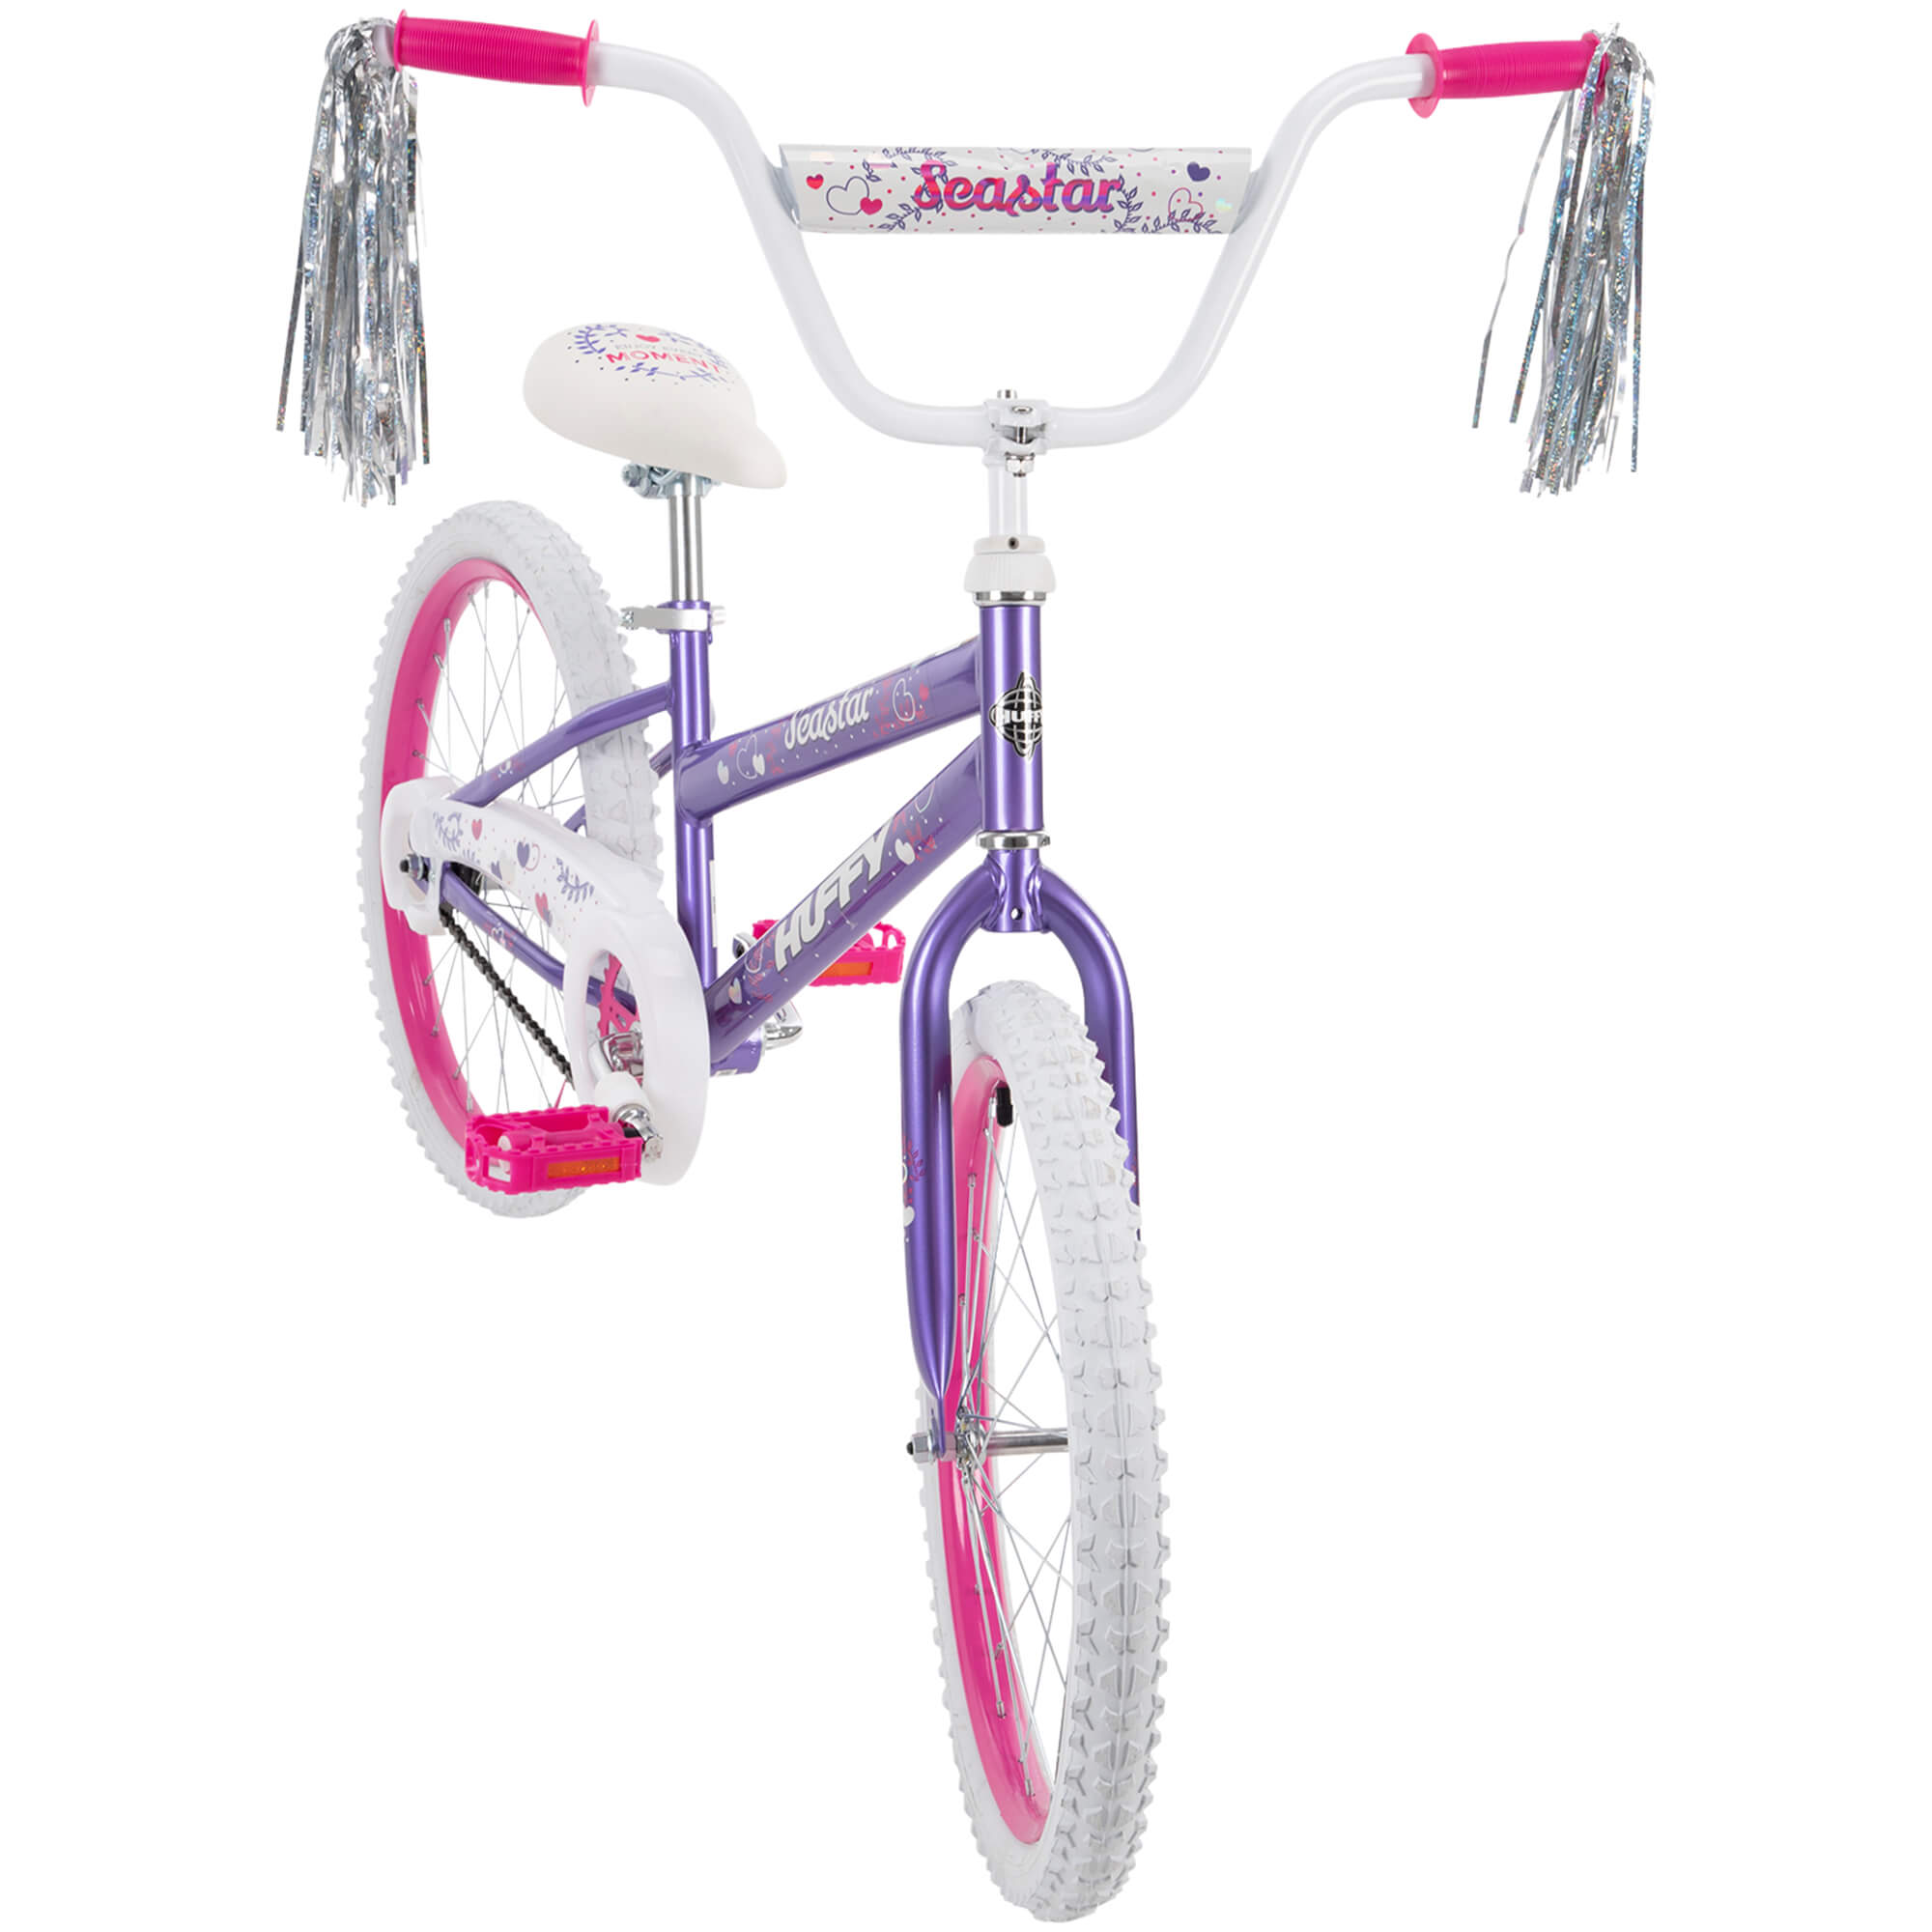 Huffy 20" Sea Star Girls Bike for Kids, Purple - image 2 of 7